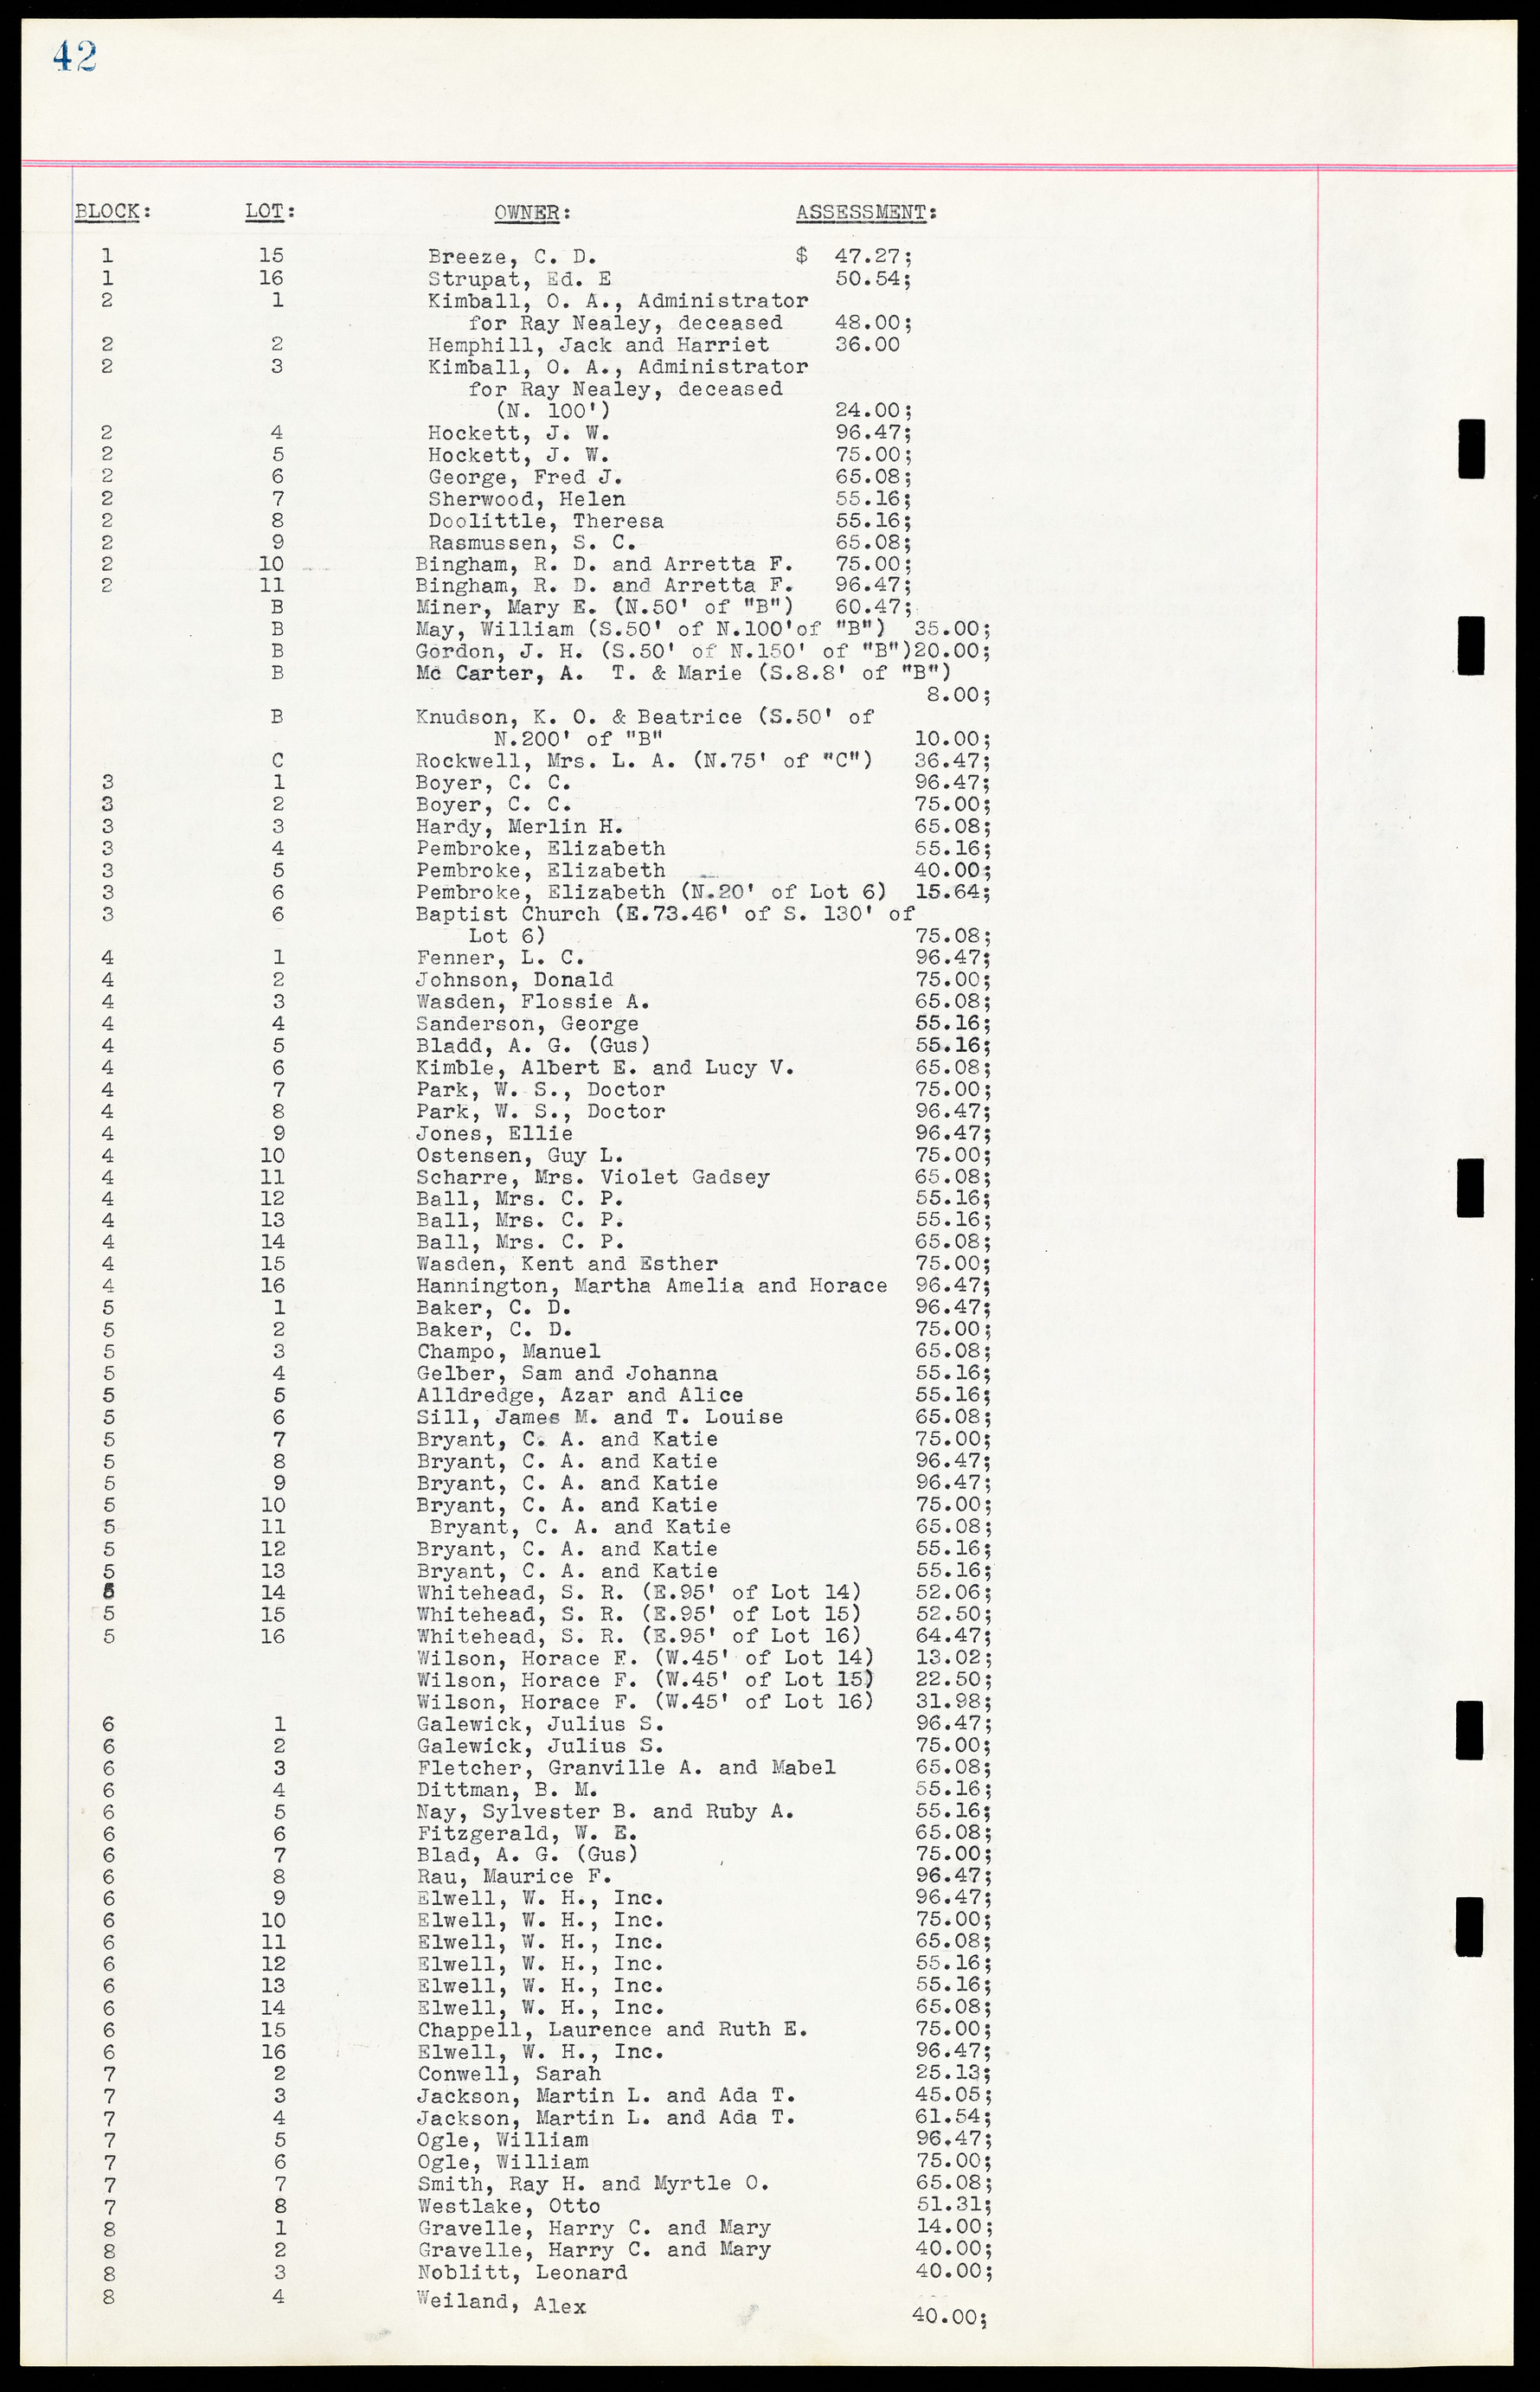 Las Vegas City Ordinances, March 31, 1933 to October 25, 1950, lvc000014-60